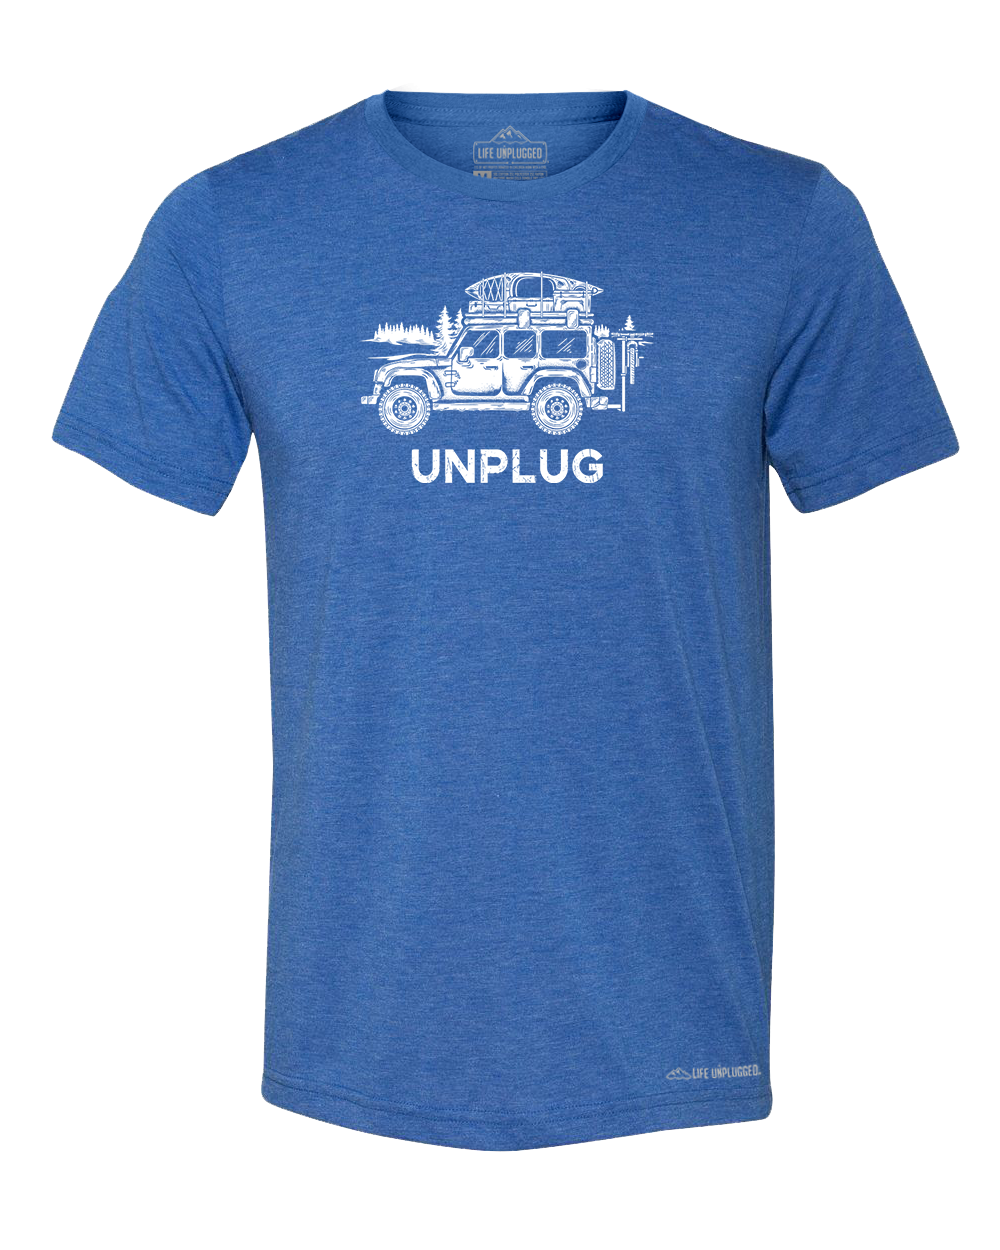 OFF-ROAD VEHICLE Premium Triblend T-Shirt - Life Unplugged